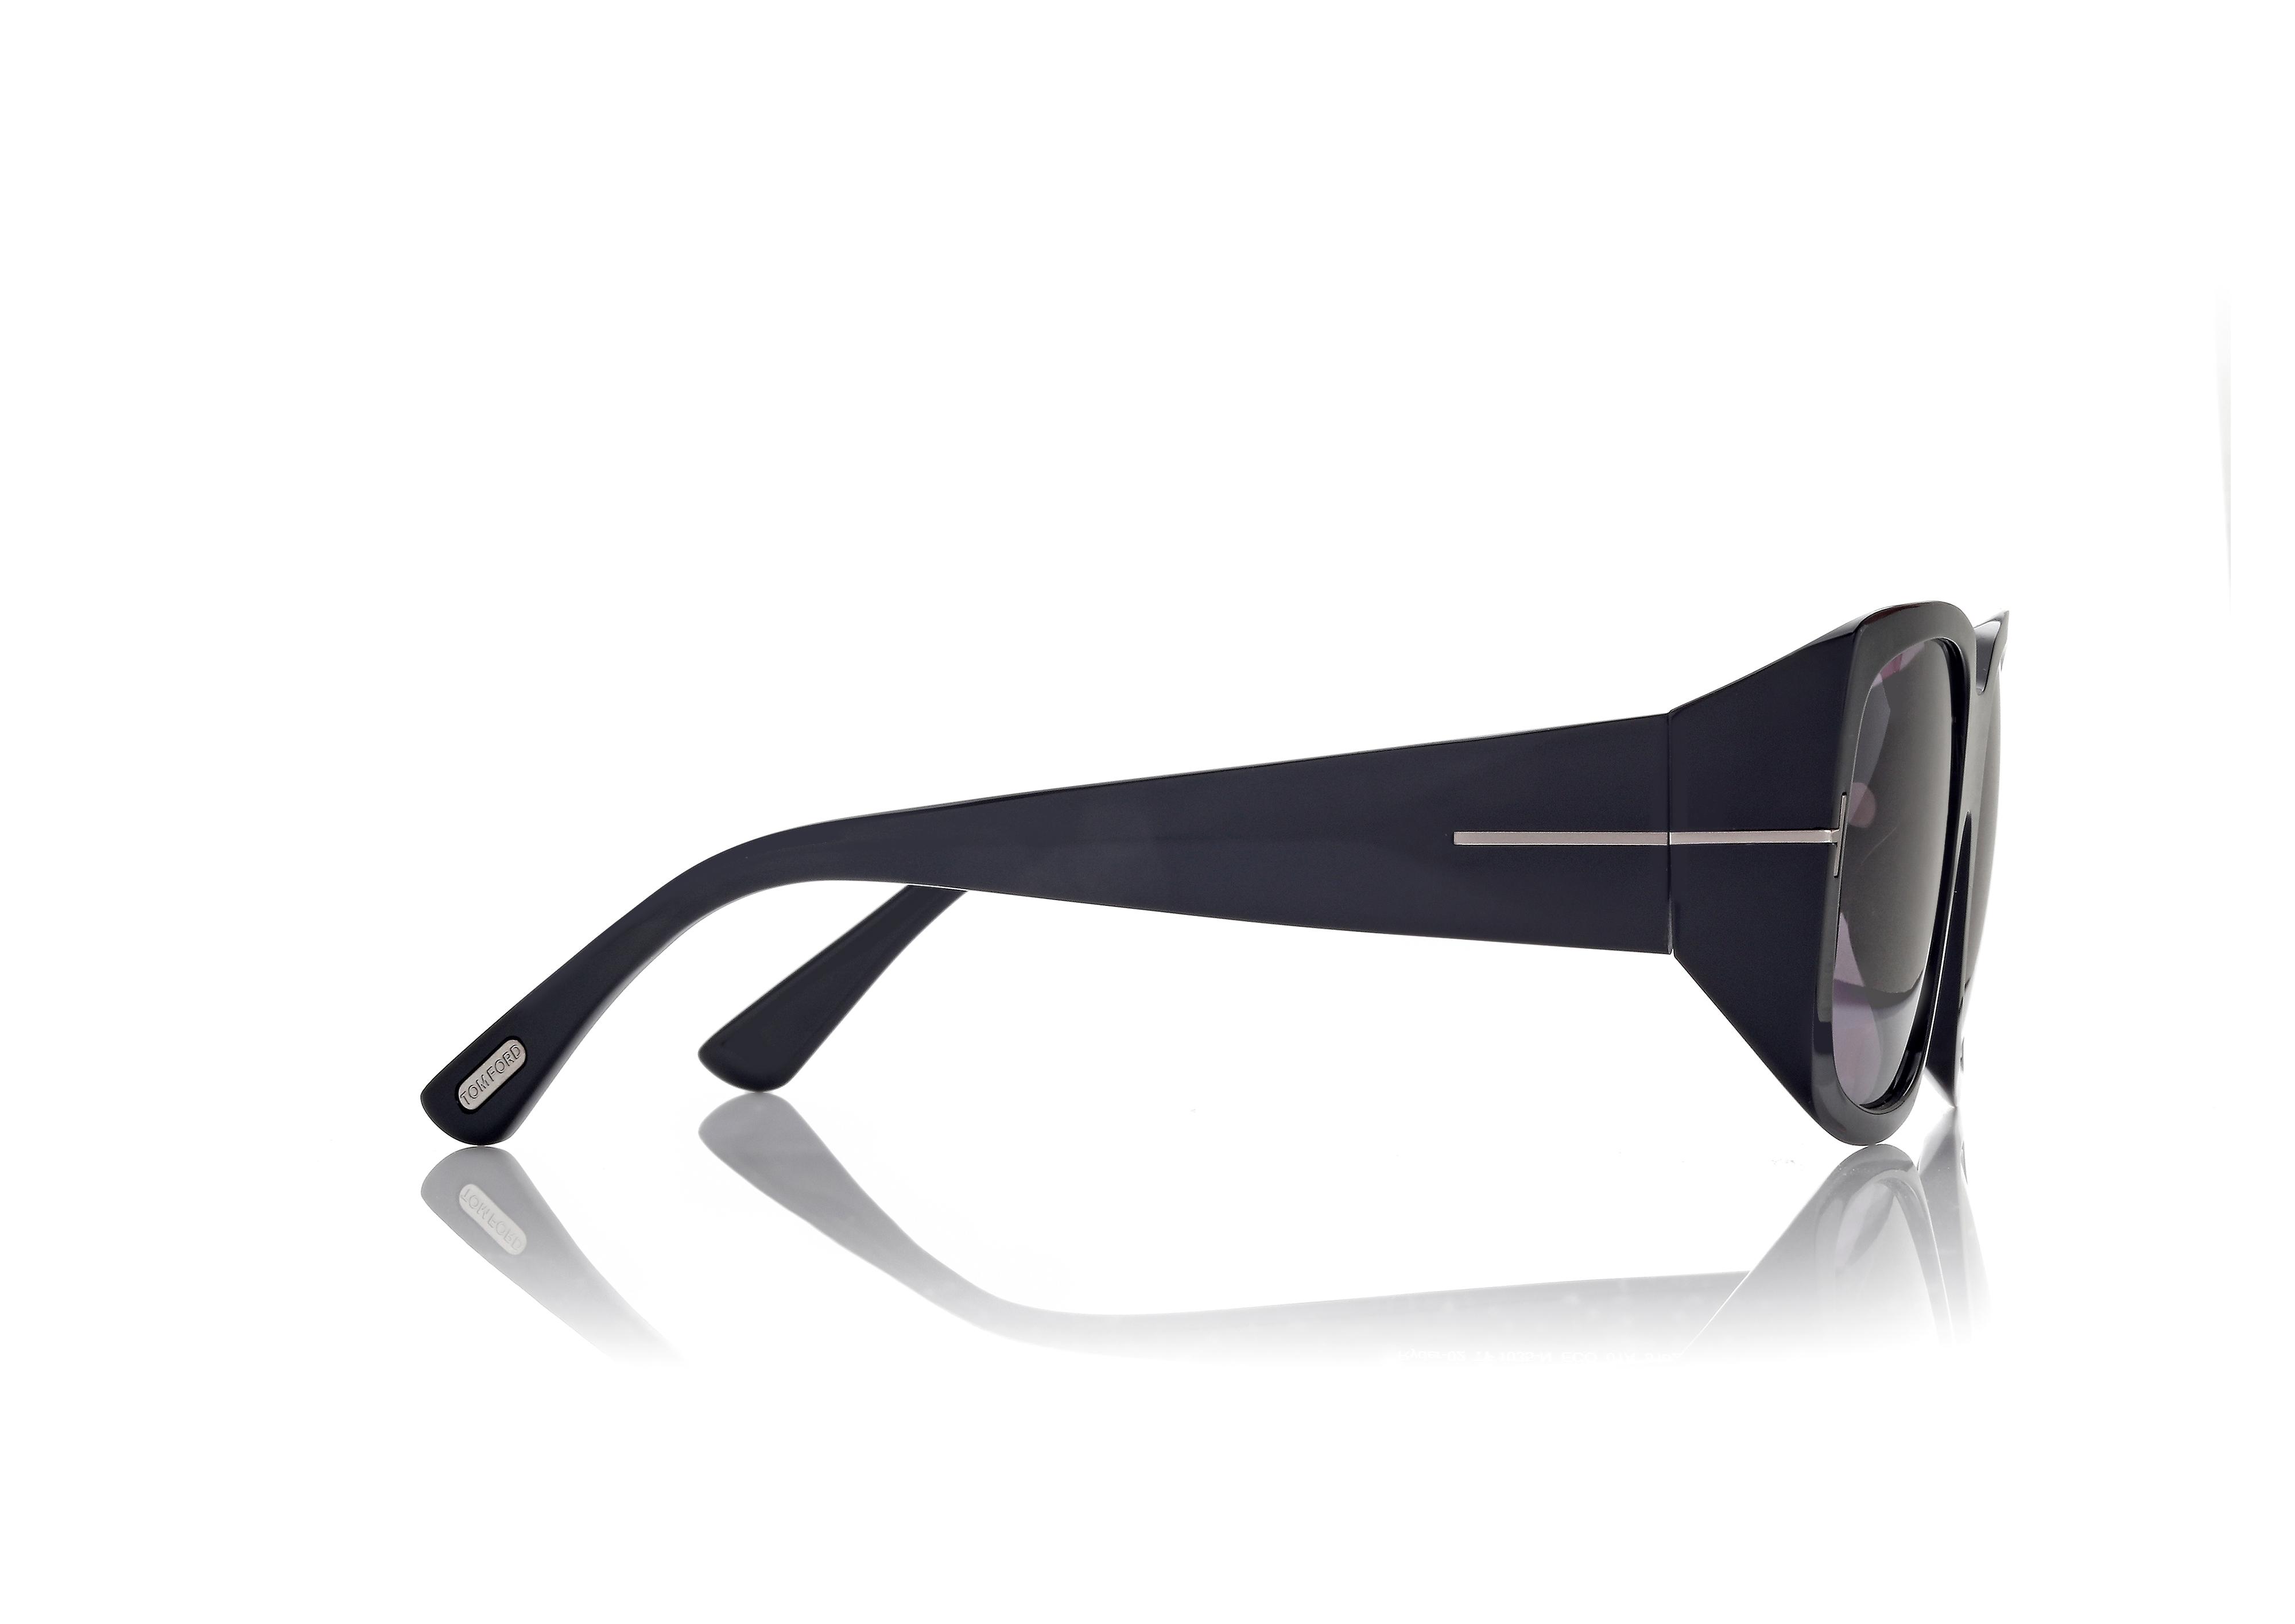 Tom Ford Ryder-02 Square Sunglasses, 51mm